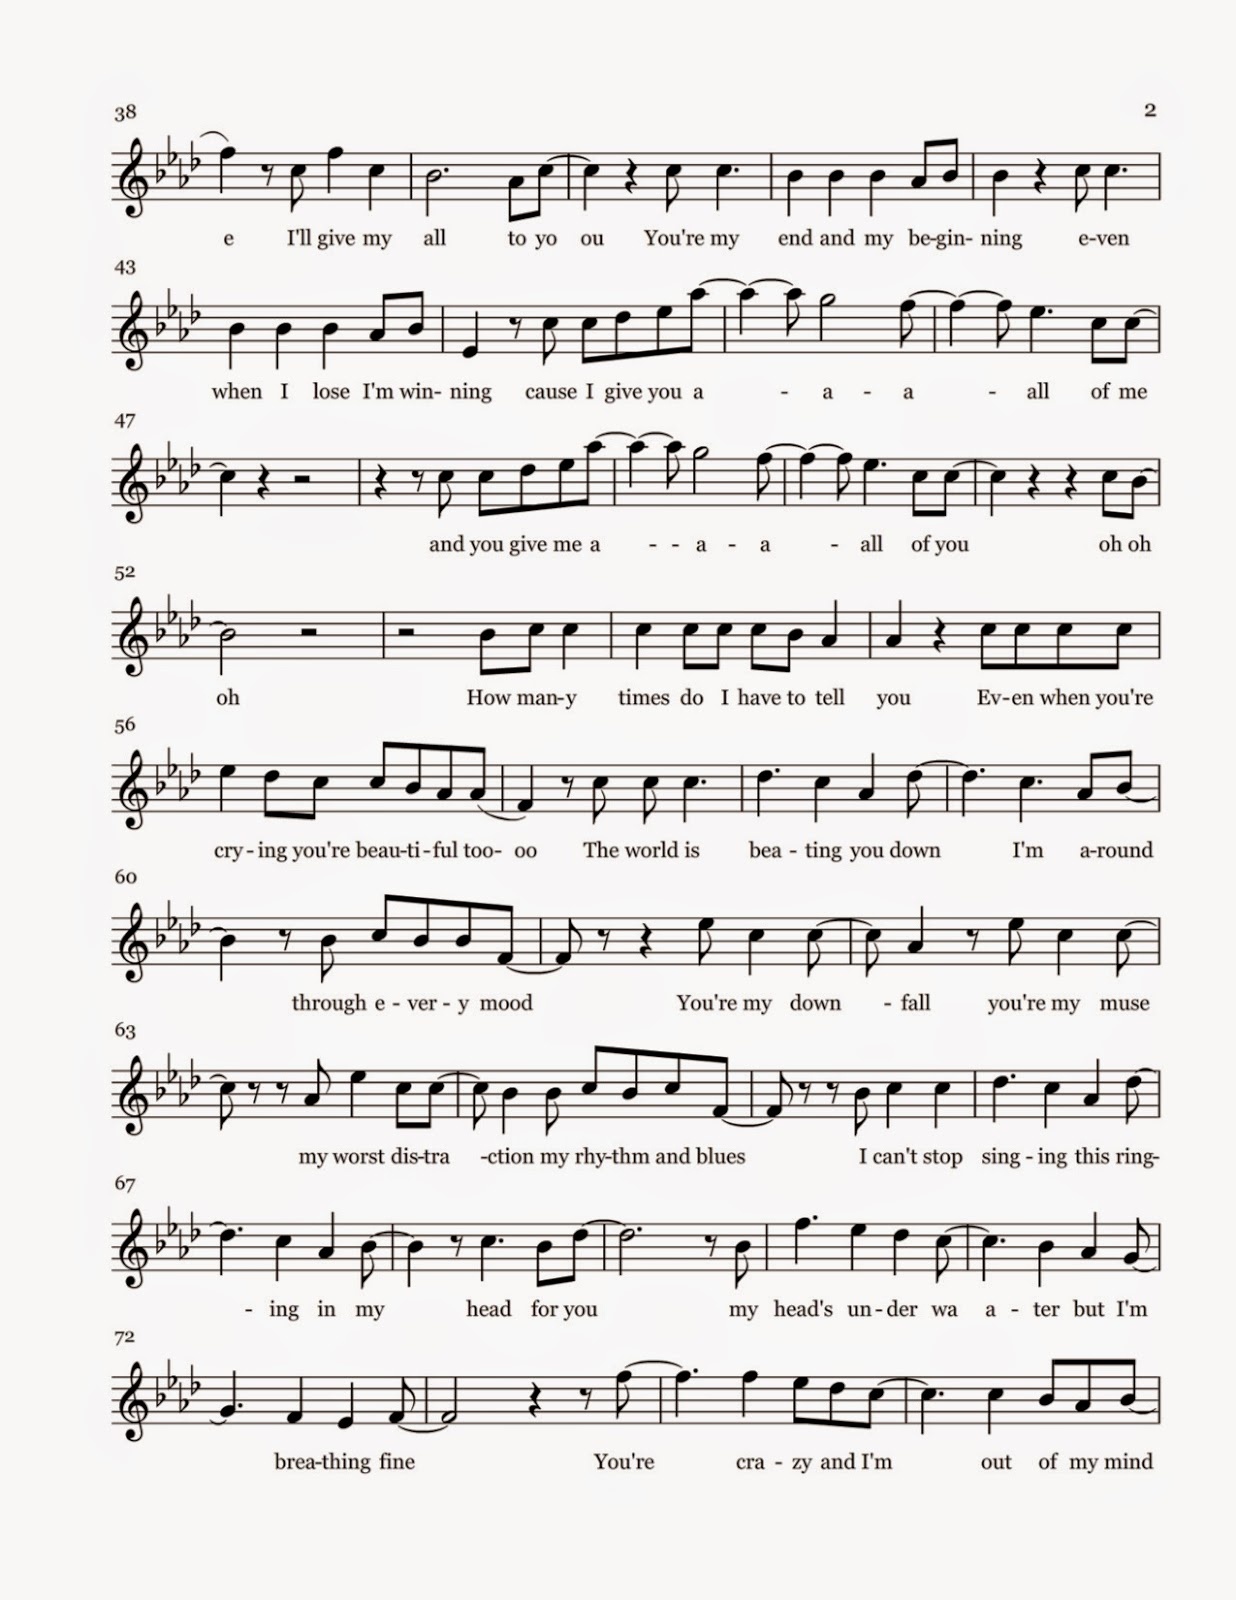 Flute Sheet Music: All Of Me - Sheet Music - Dynamite Piano Sheet Music Free Printable